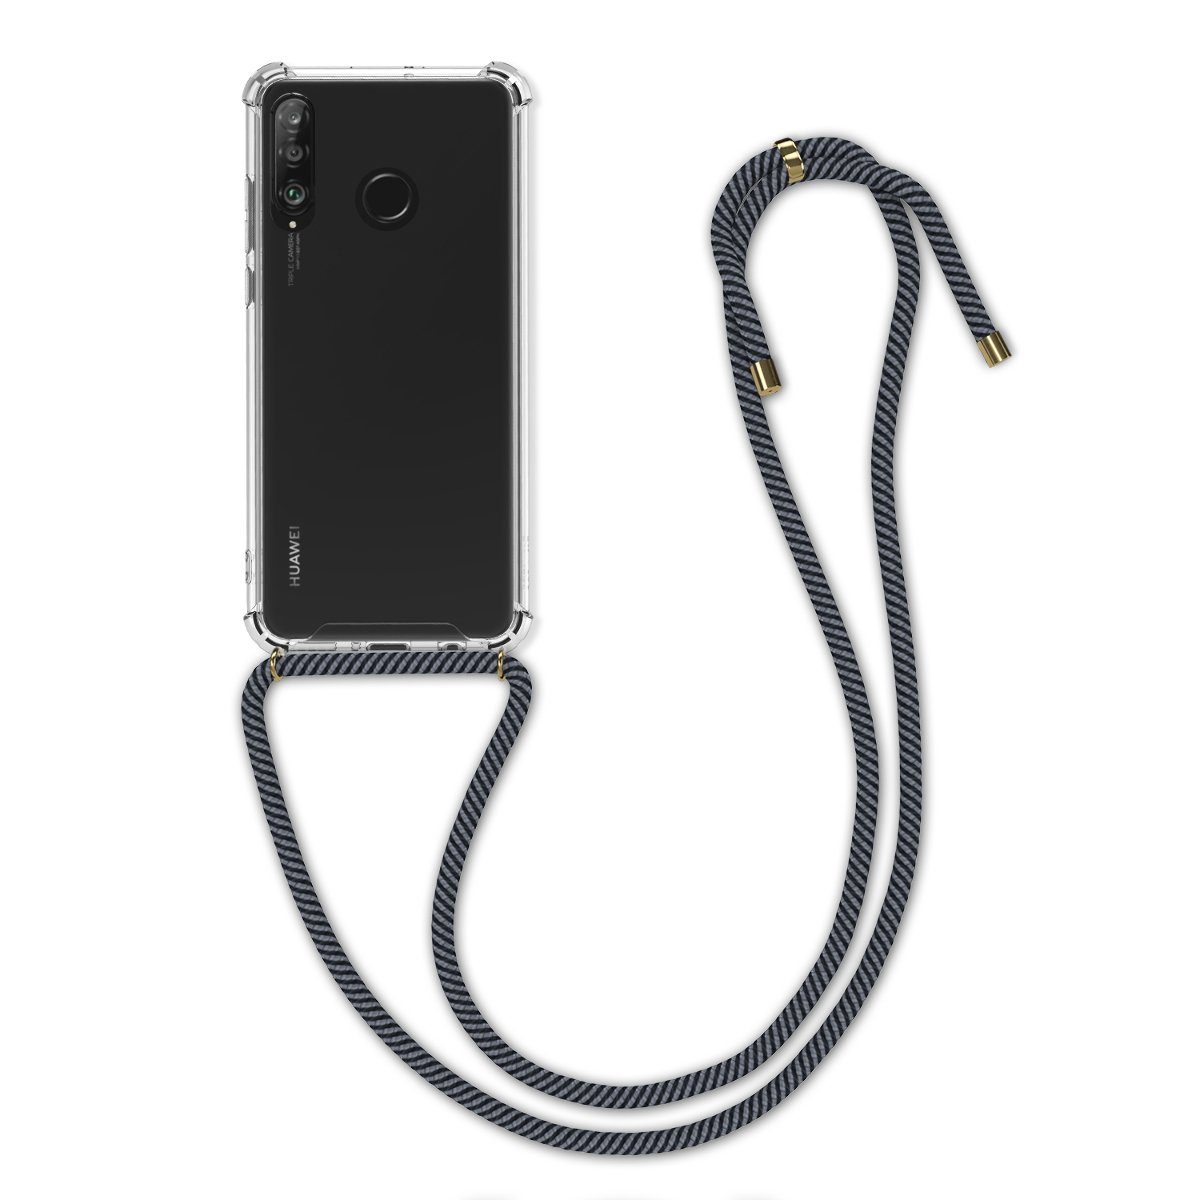 kwmobile Handyhülle Necklace Case für Huawei P30 Lite, Hülle Silikon mit Handykette - Band Handyhülle